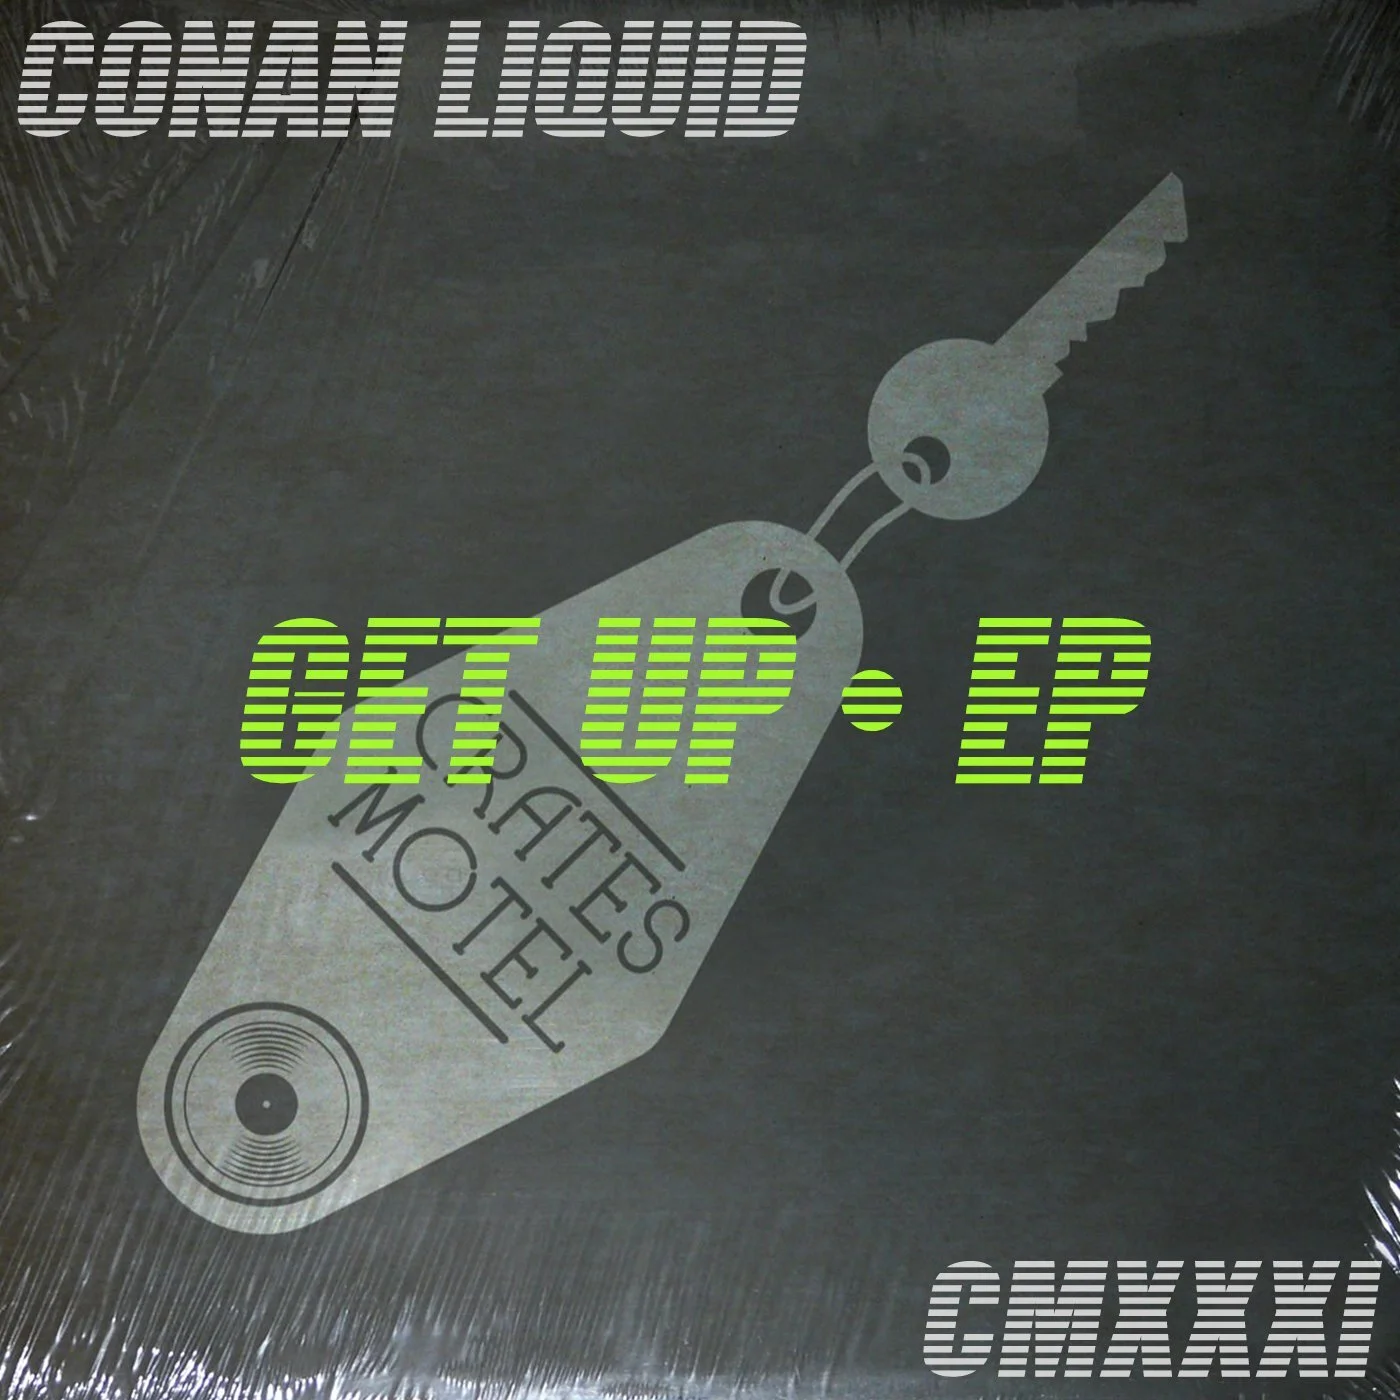 Conan Liquid - Trust In Me (LoFi Mix)